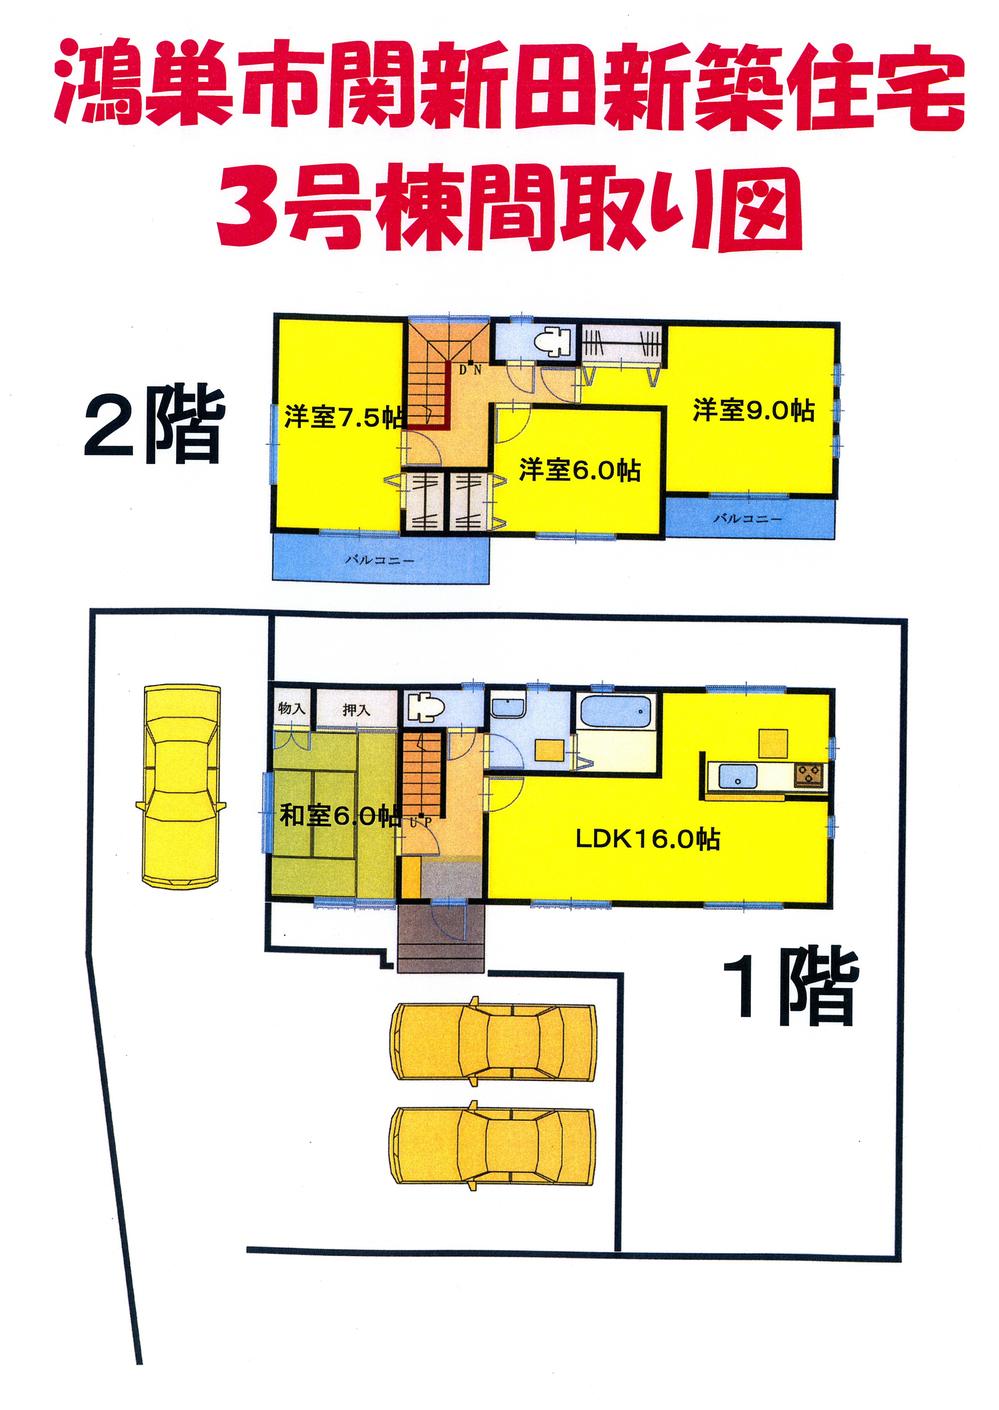 Floor plan. (3 Building), Price 18,800,000 yen, 4LDK, Land area 301.08 sq m , Building area 104.33 sq m